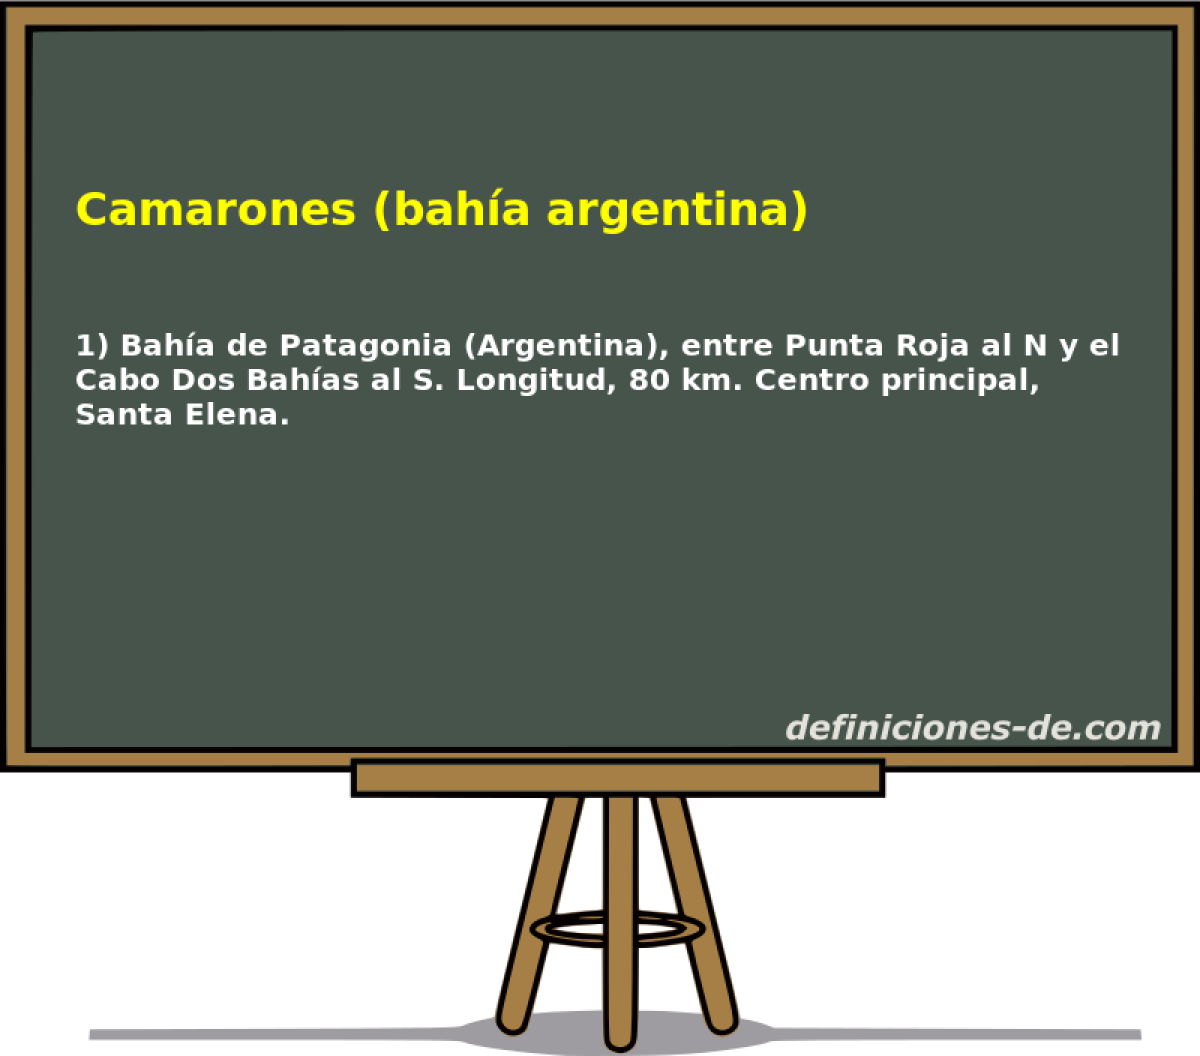 Camarones (baha argentina) 